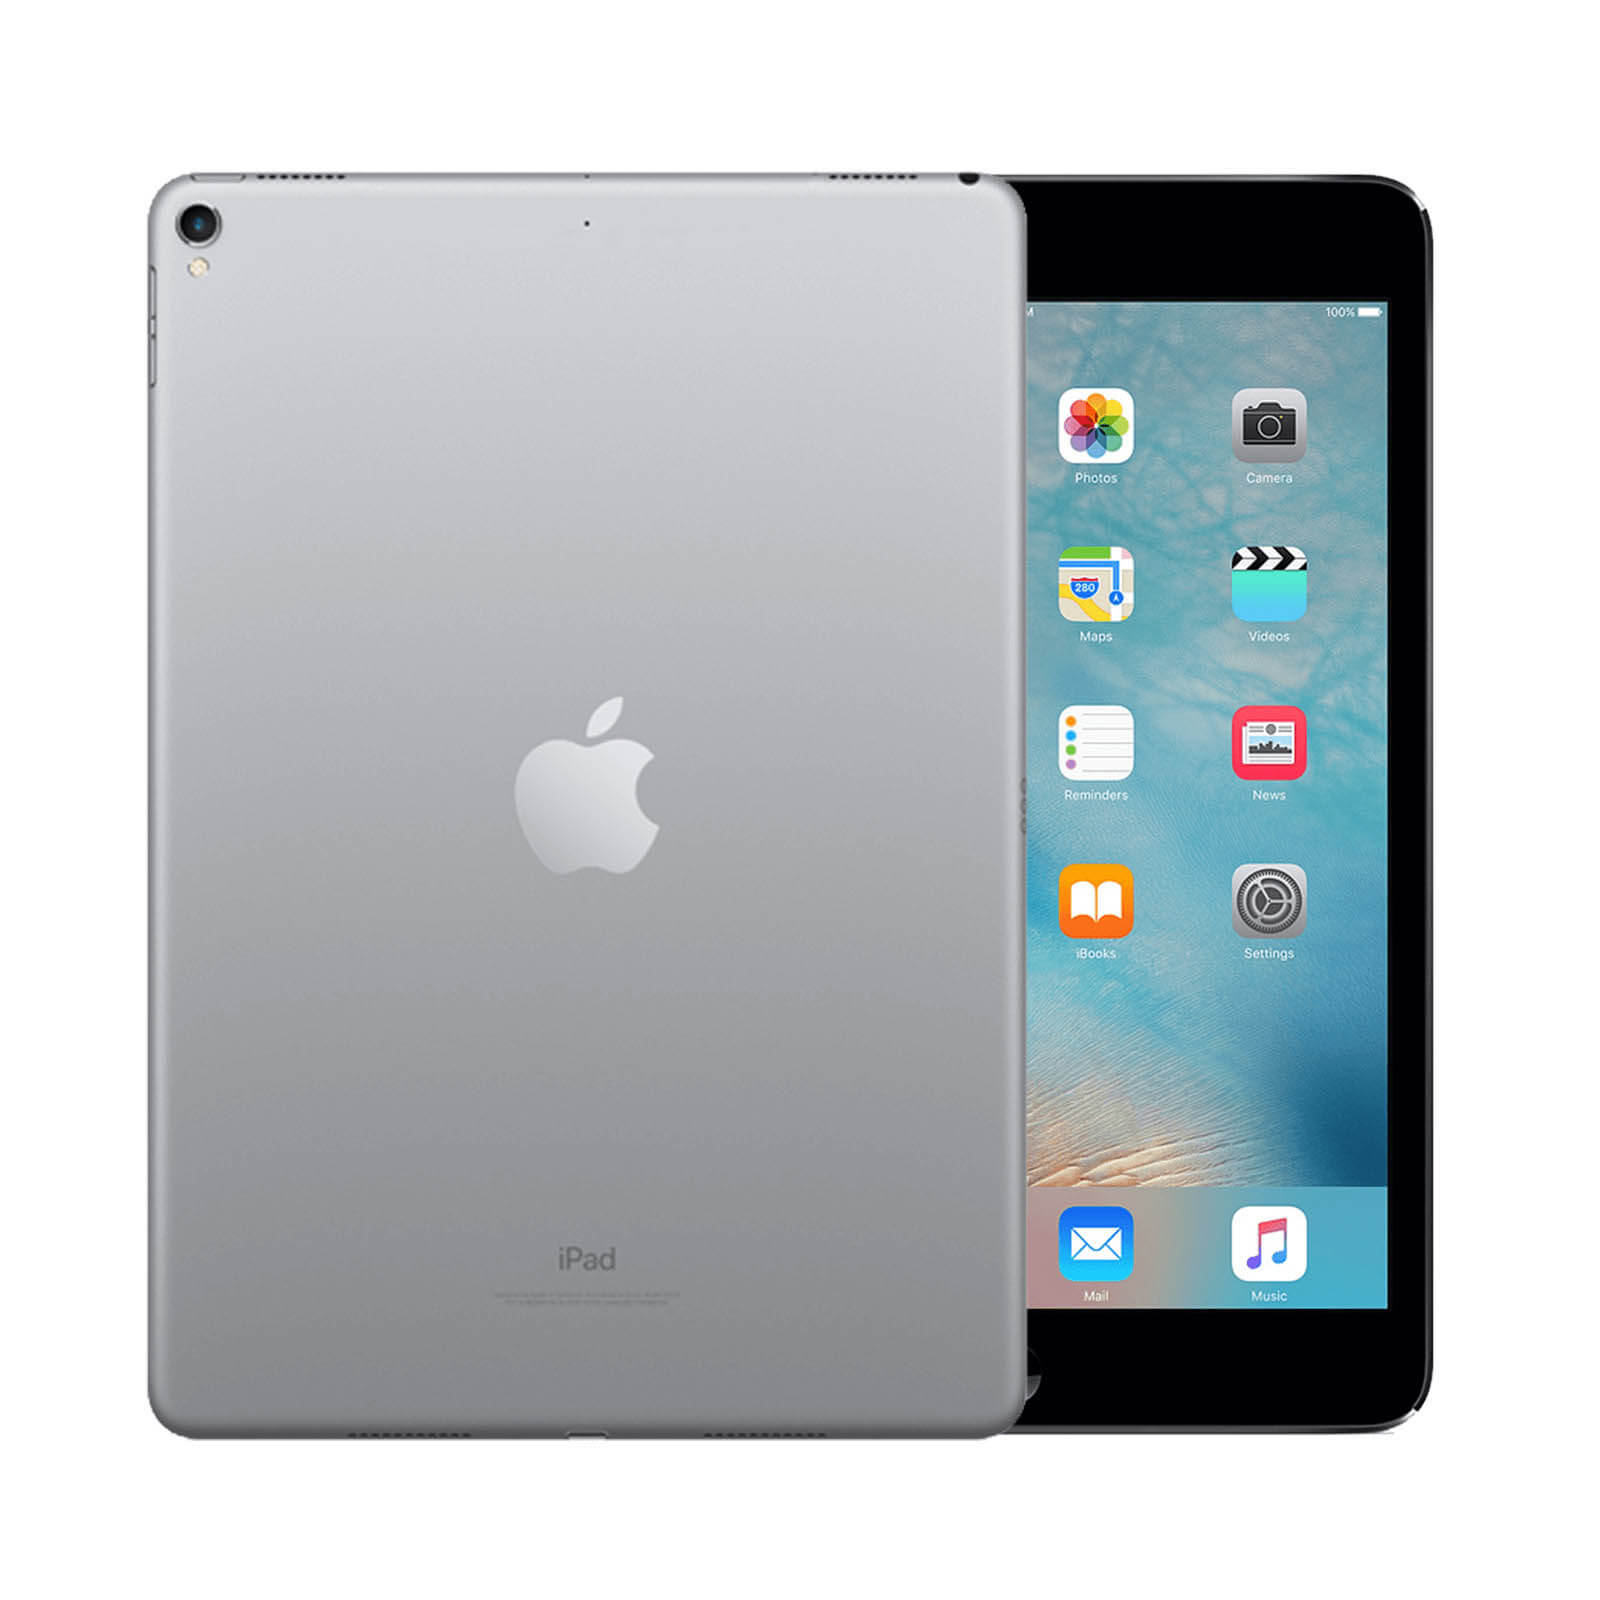 iPad Pro 9.7 Inch 128GB Space Grey Very Good - WiFi